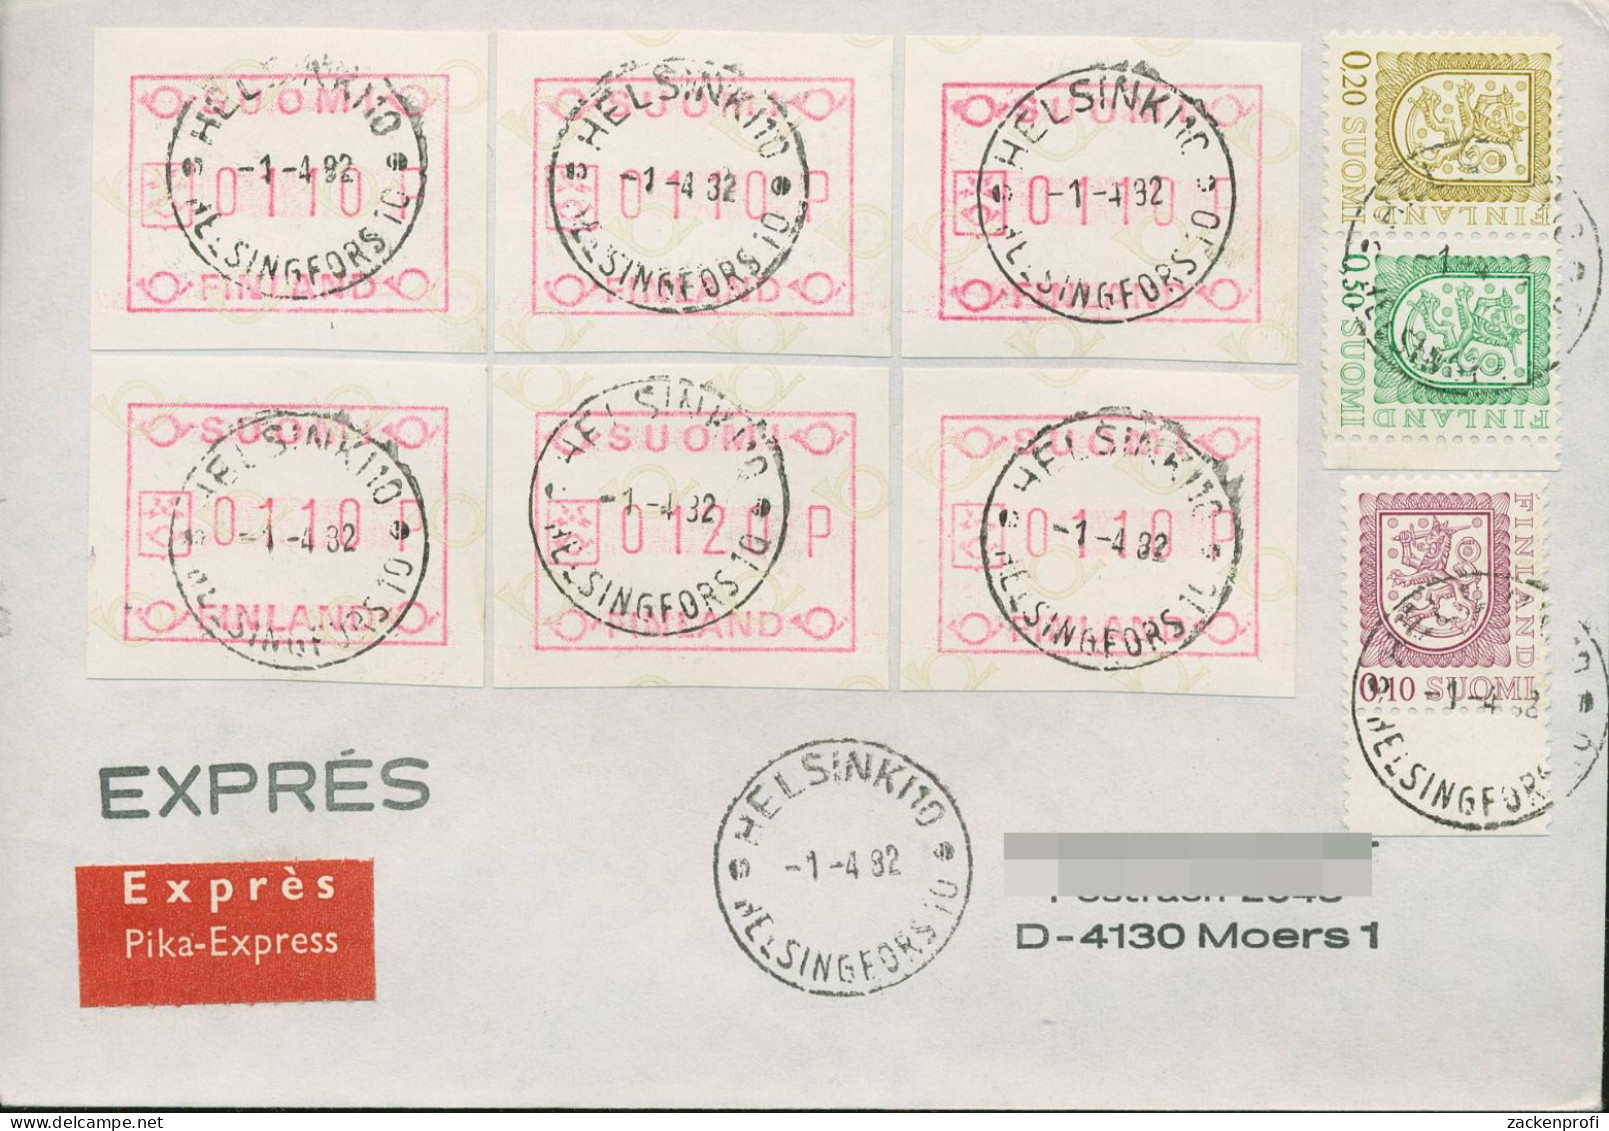 Finnland ATM 1982 Kl. Posthörner, FDC ATM 1.1 Auf Express-Brief (X80556) - Timbres De Distributeurs [ATM]